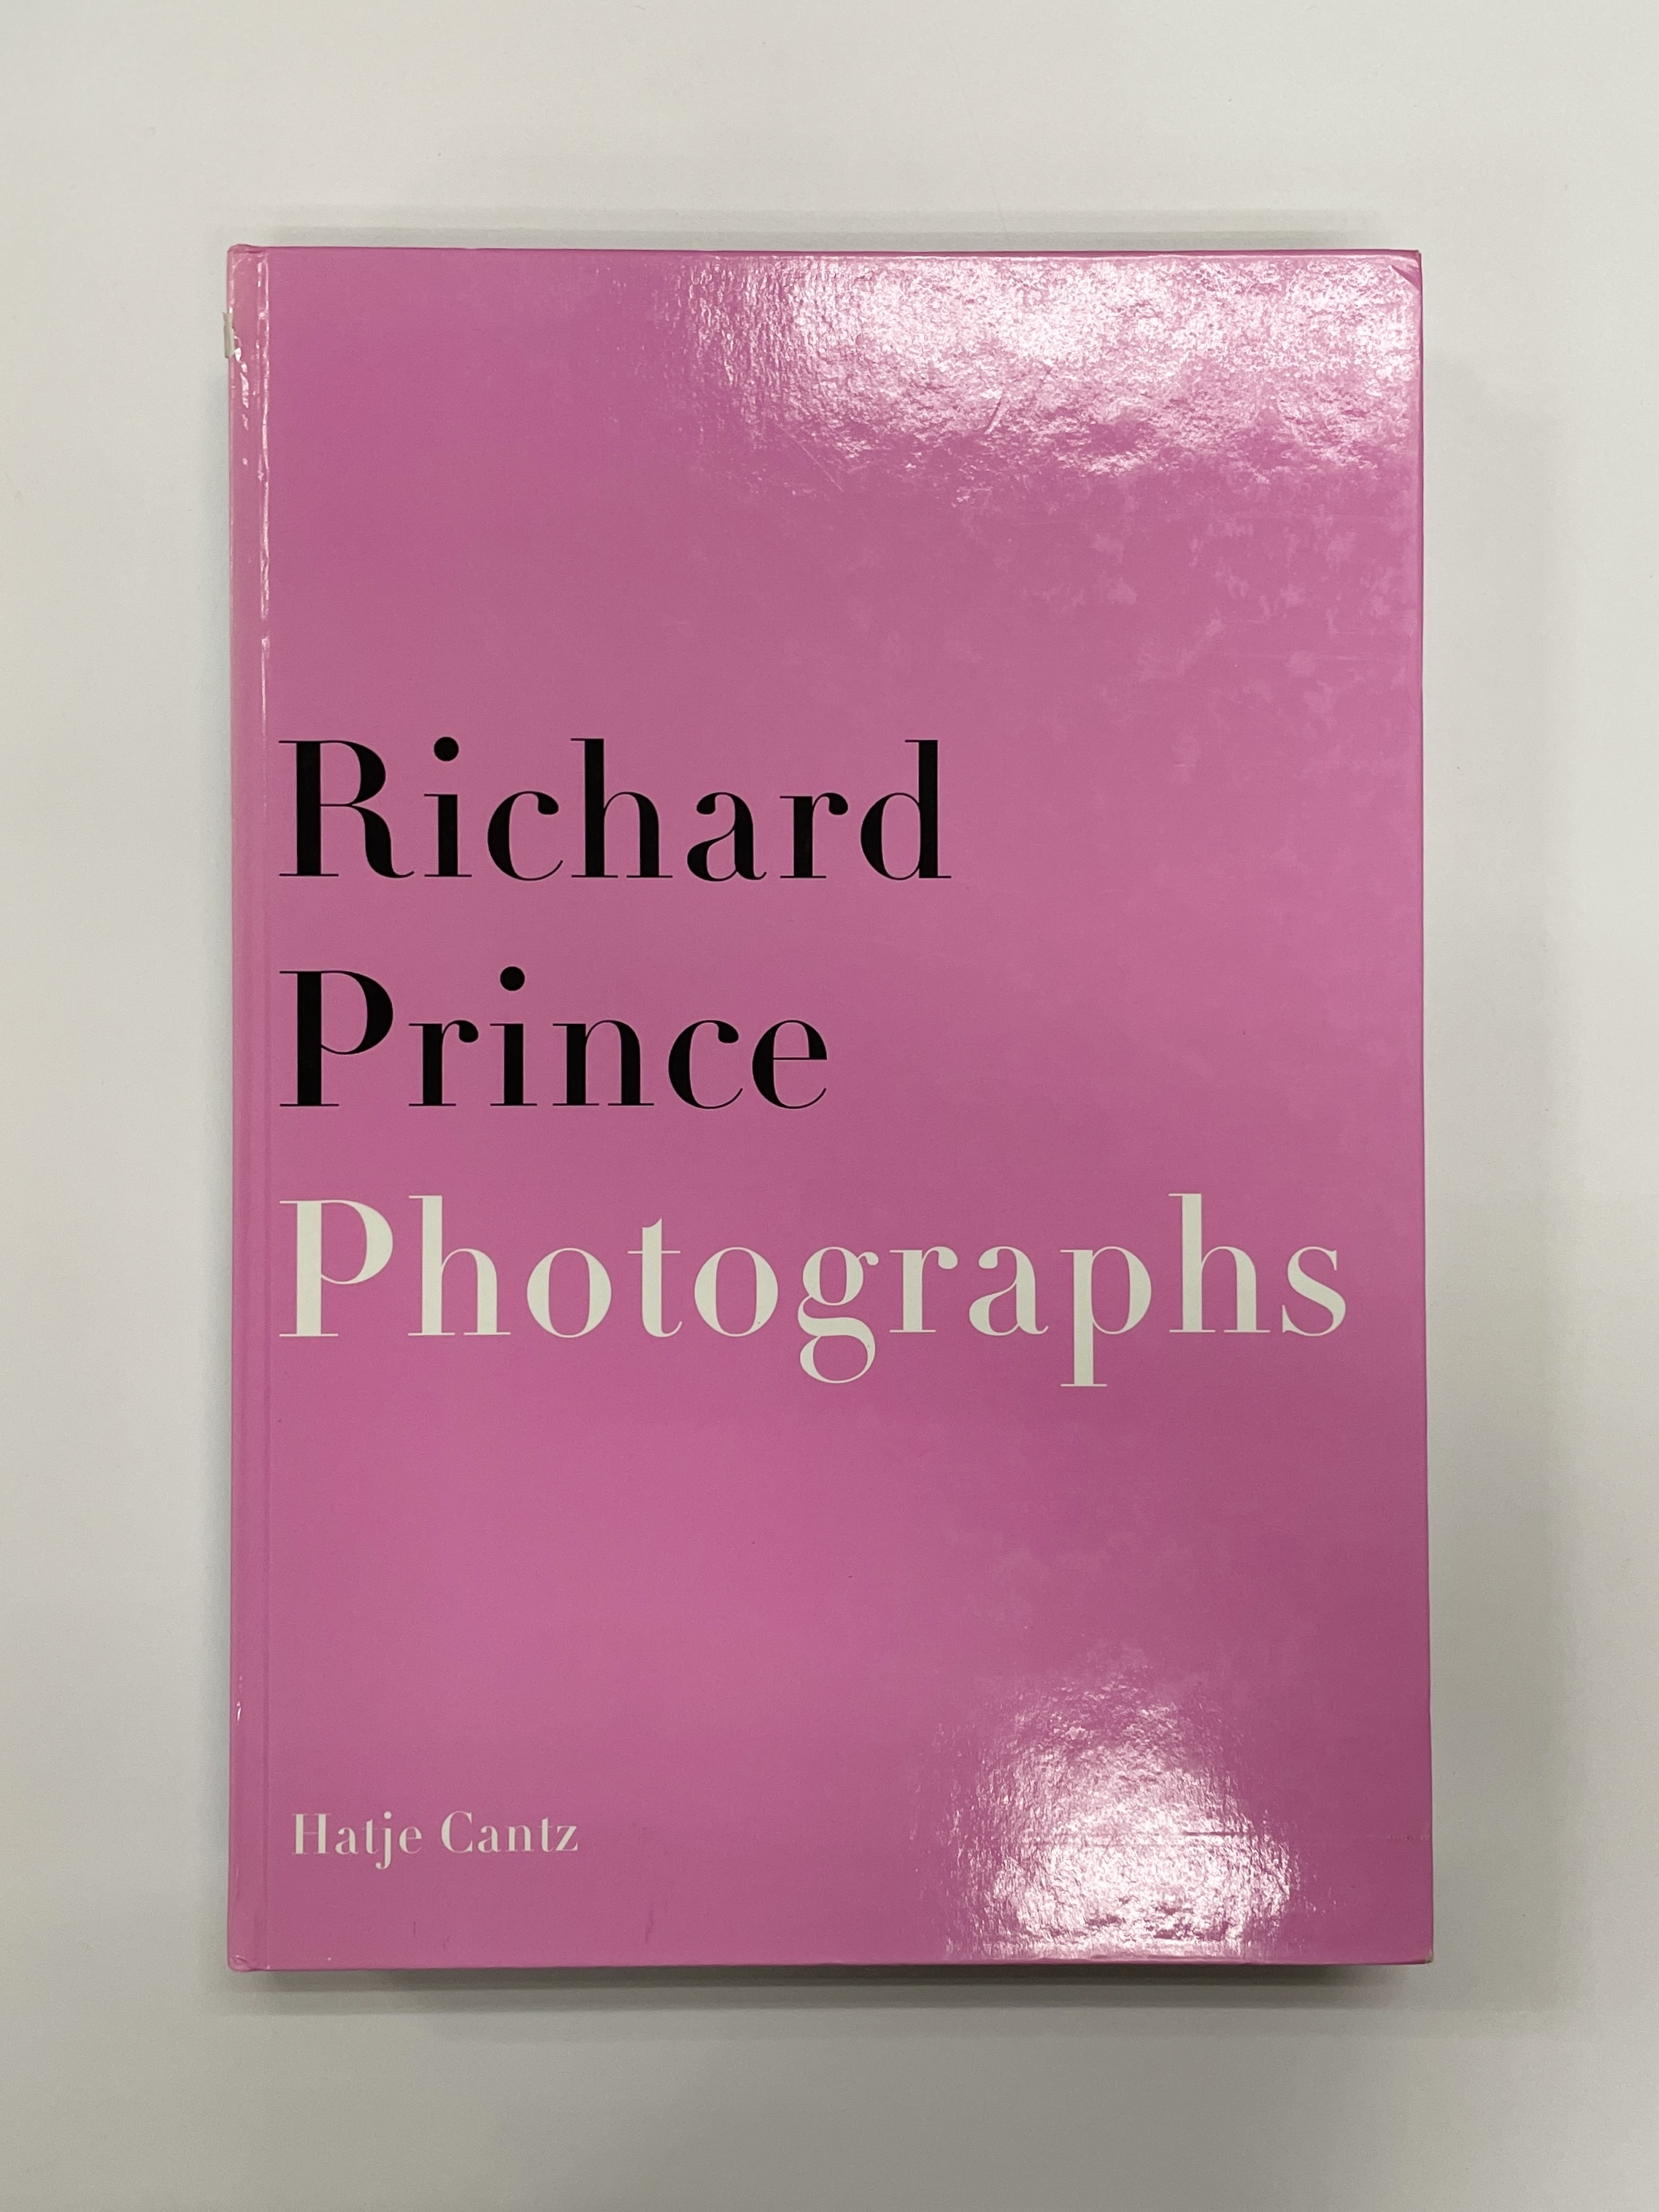 PHOTOGRAPHY & ART BOOKS - RICHARD PRINCE - Image 5 of 9